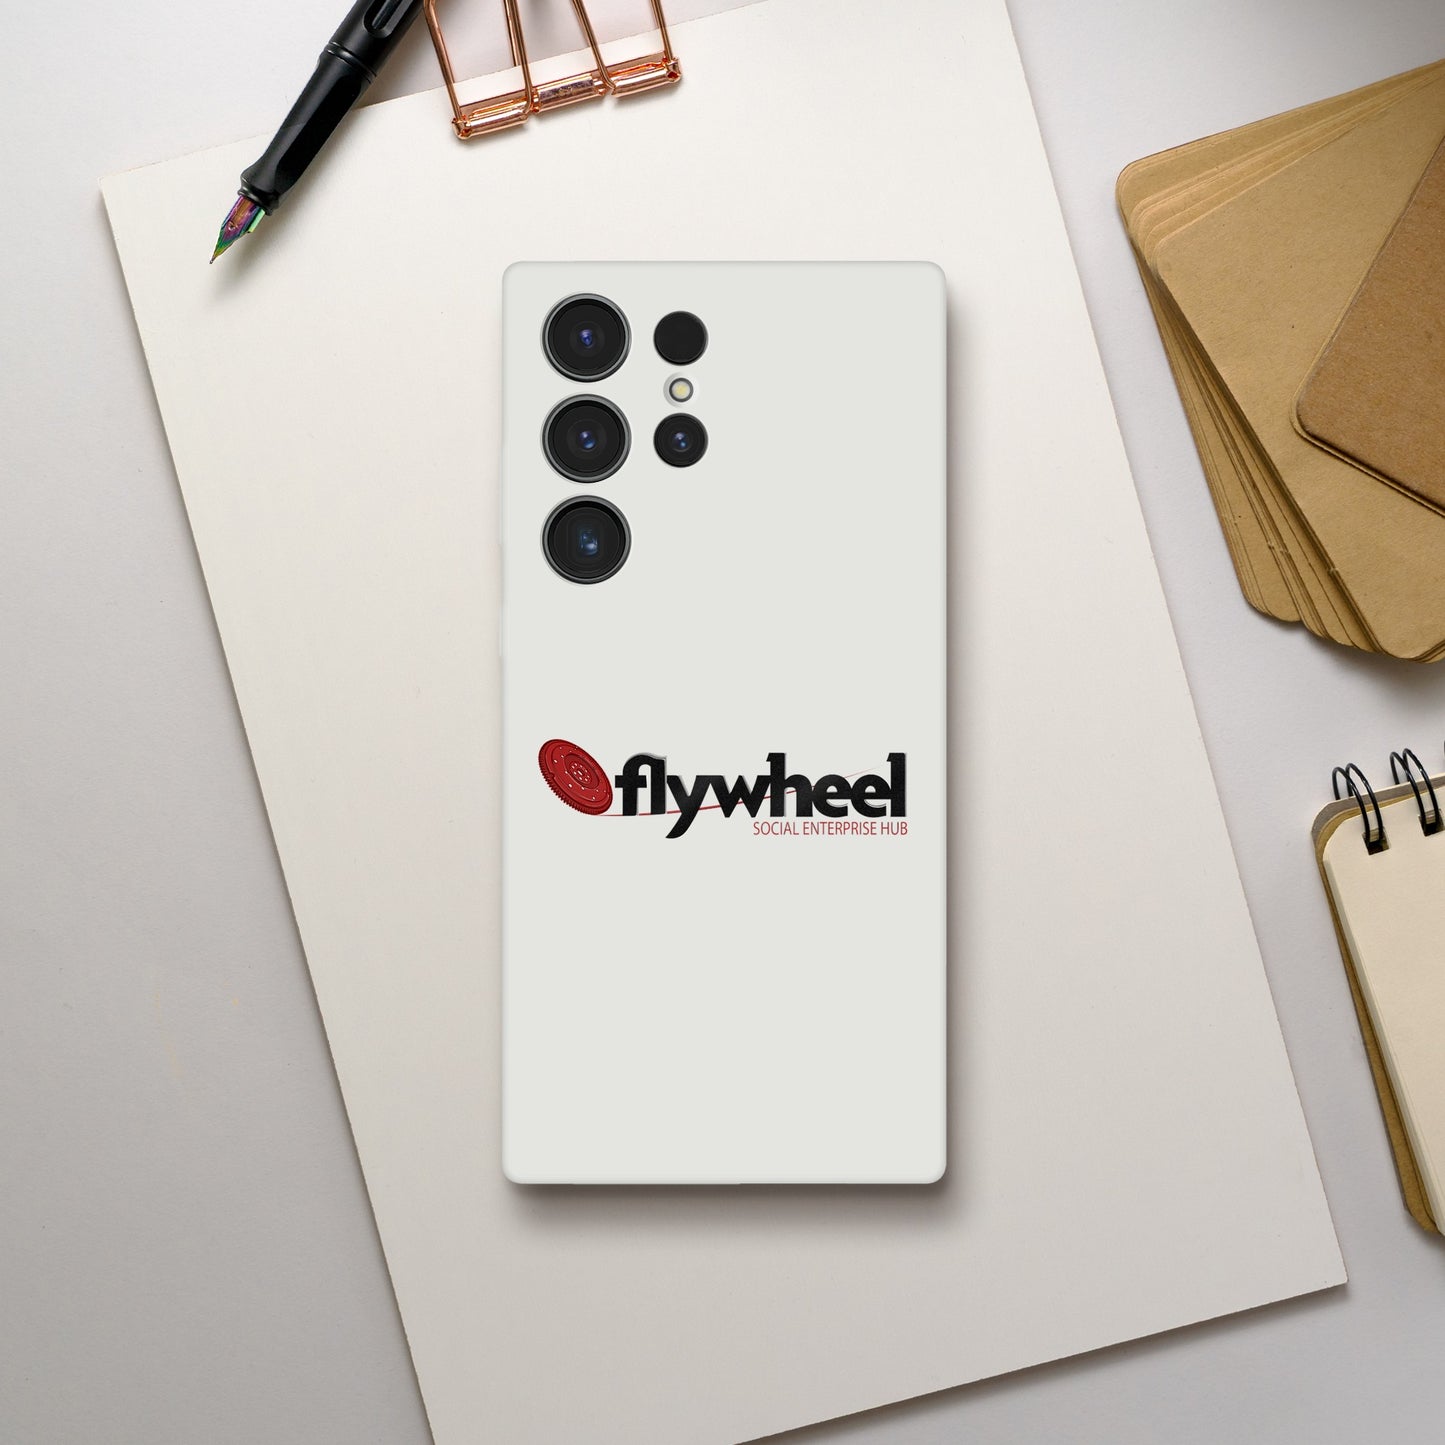 Flywheel Social Enterprise Hub - Flexi case